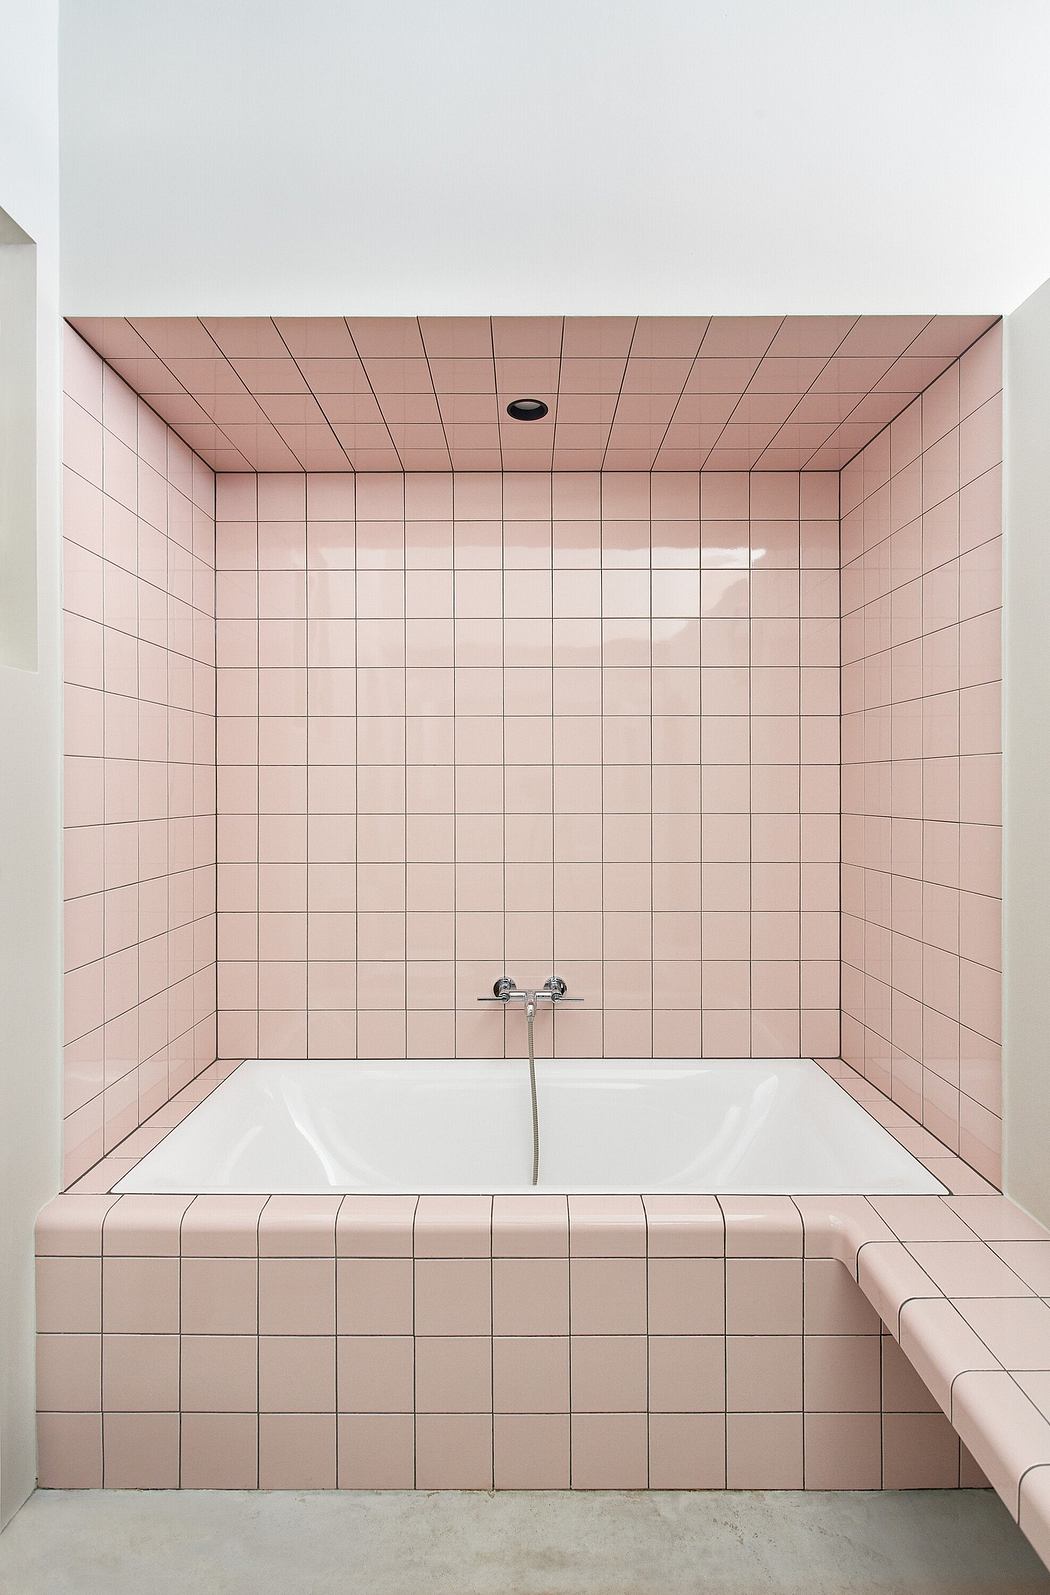 A pink-tiled bathroom with a white corner bathtub.